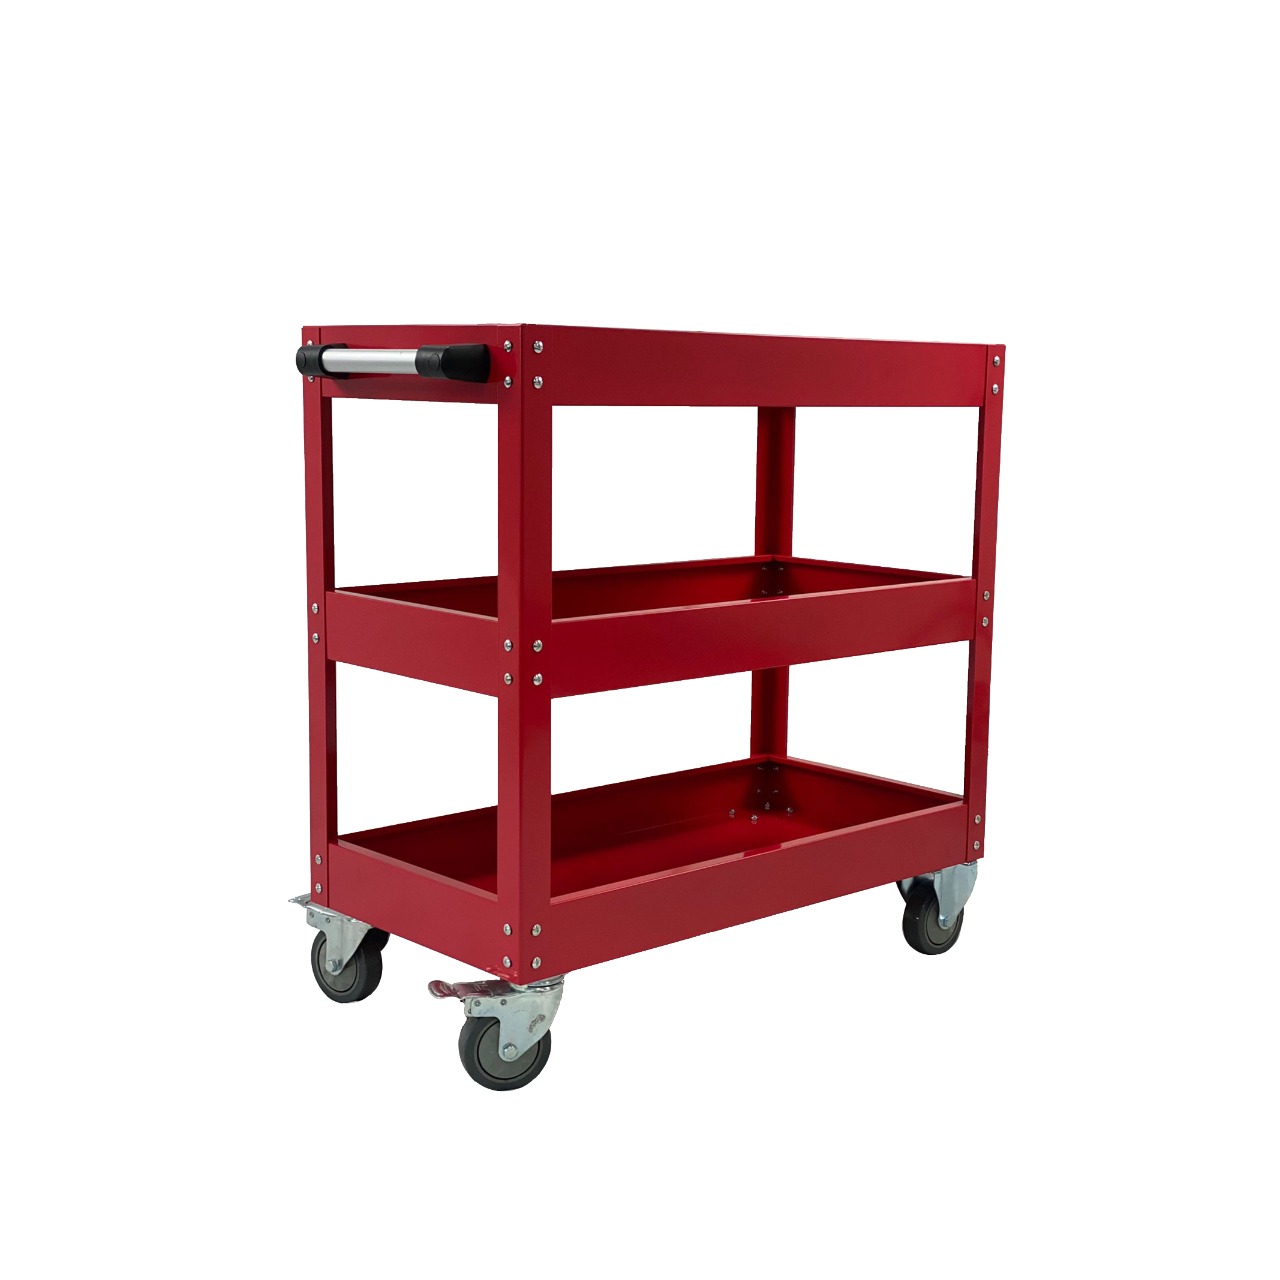 New ESSupplier Bigger & Wider Tool Trolley Cart Storage  Red